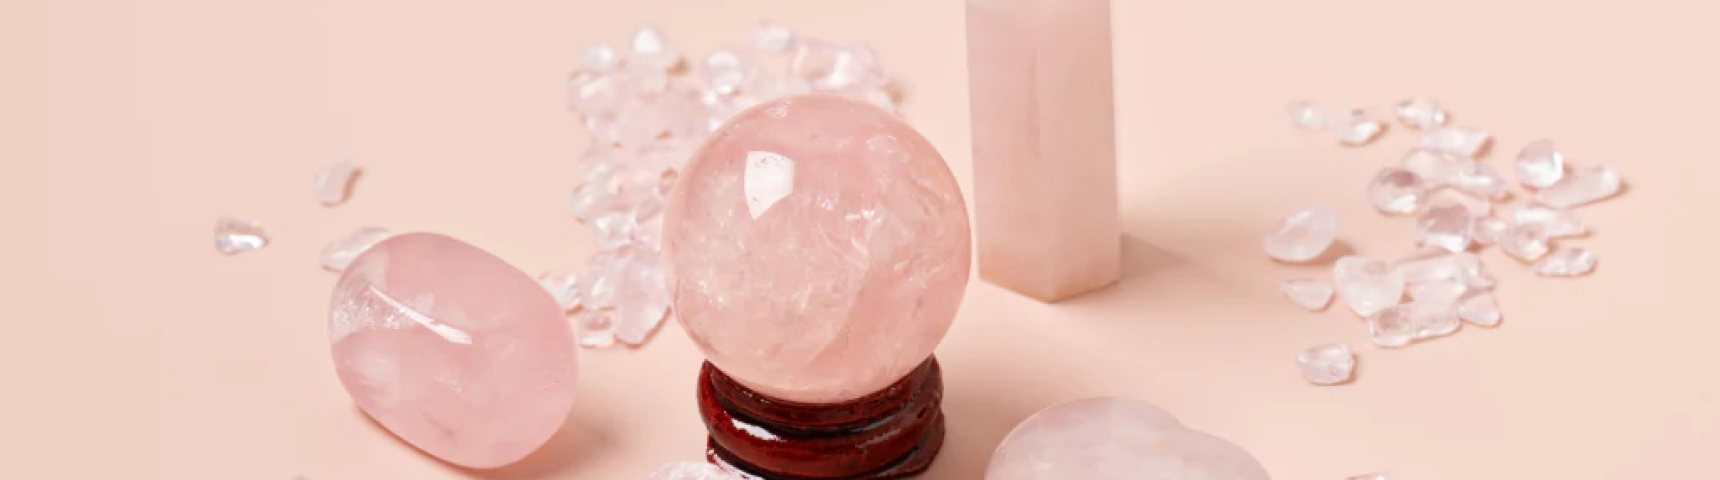 How To Use Rose Quartz Crystals To Manifest Love | Sarah Scoop